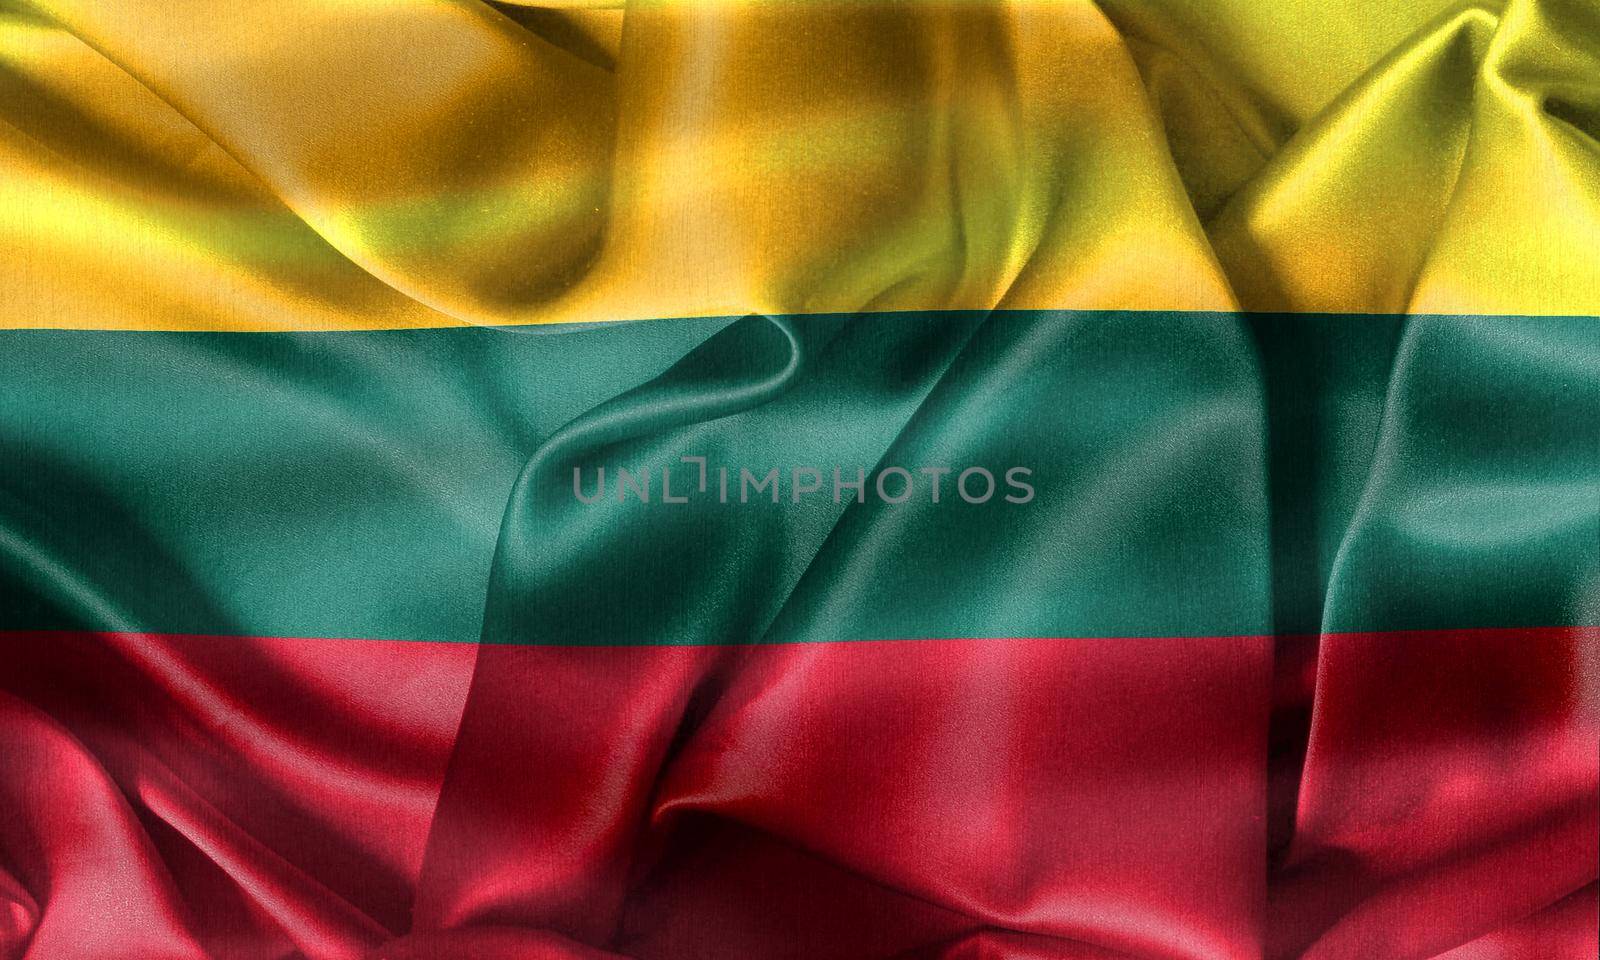 Lithuania flag - realistic waving fabric flag